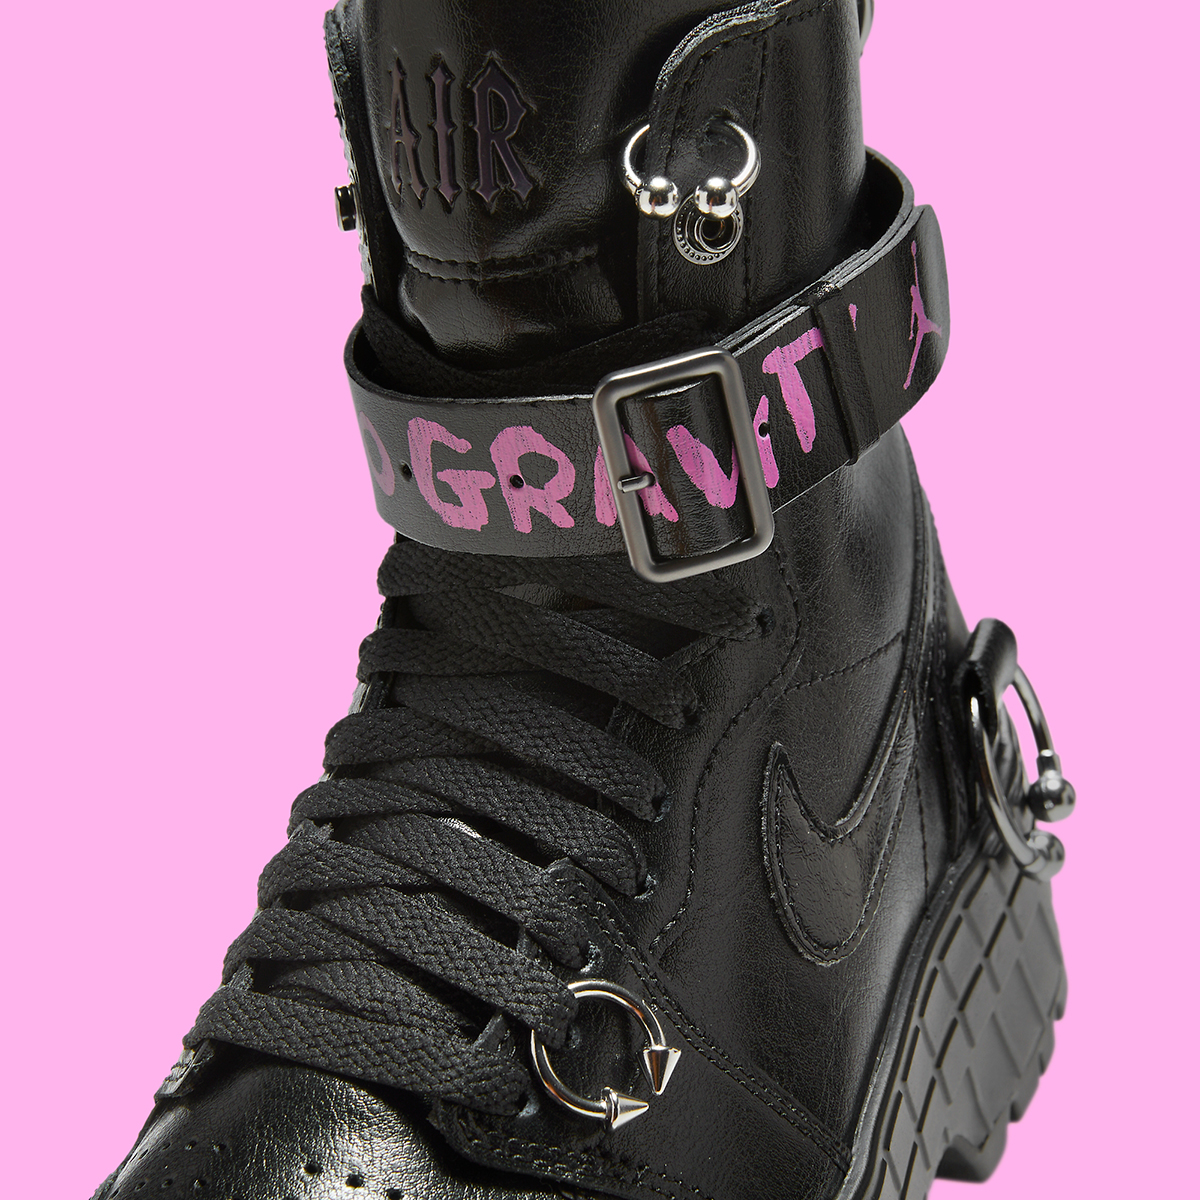 Air Jordan 3 Retro Cyber Monday Blackout ballhard_d Brooklyn Gravity Goth Punk Hf5691 001 6